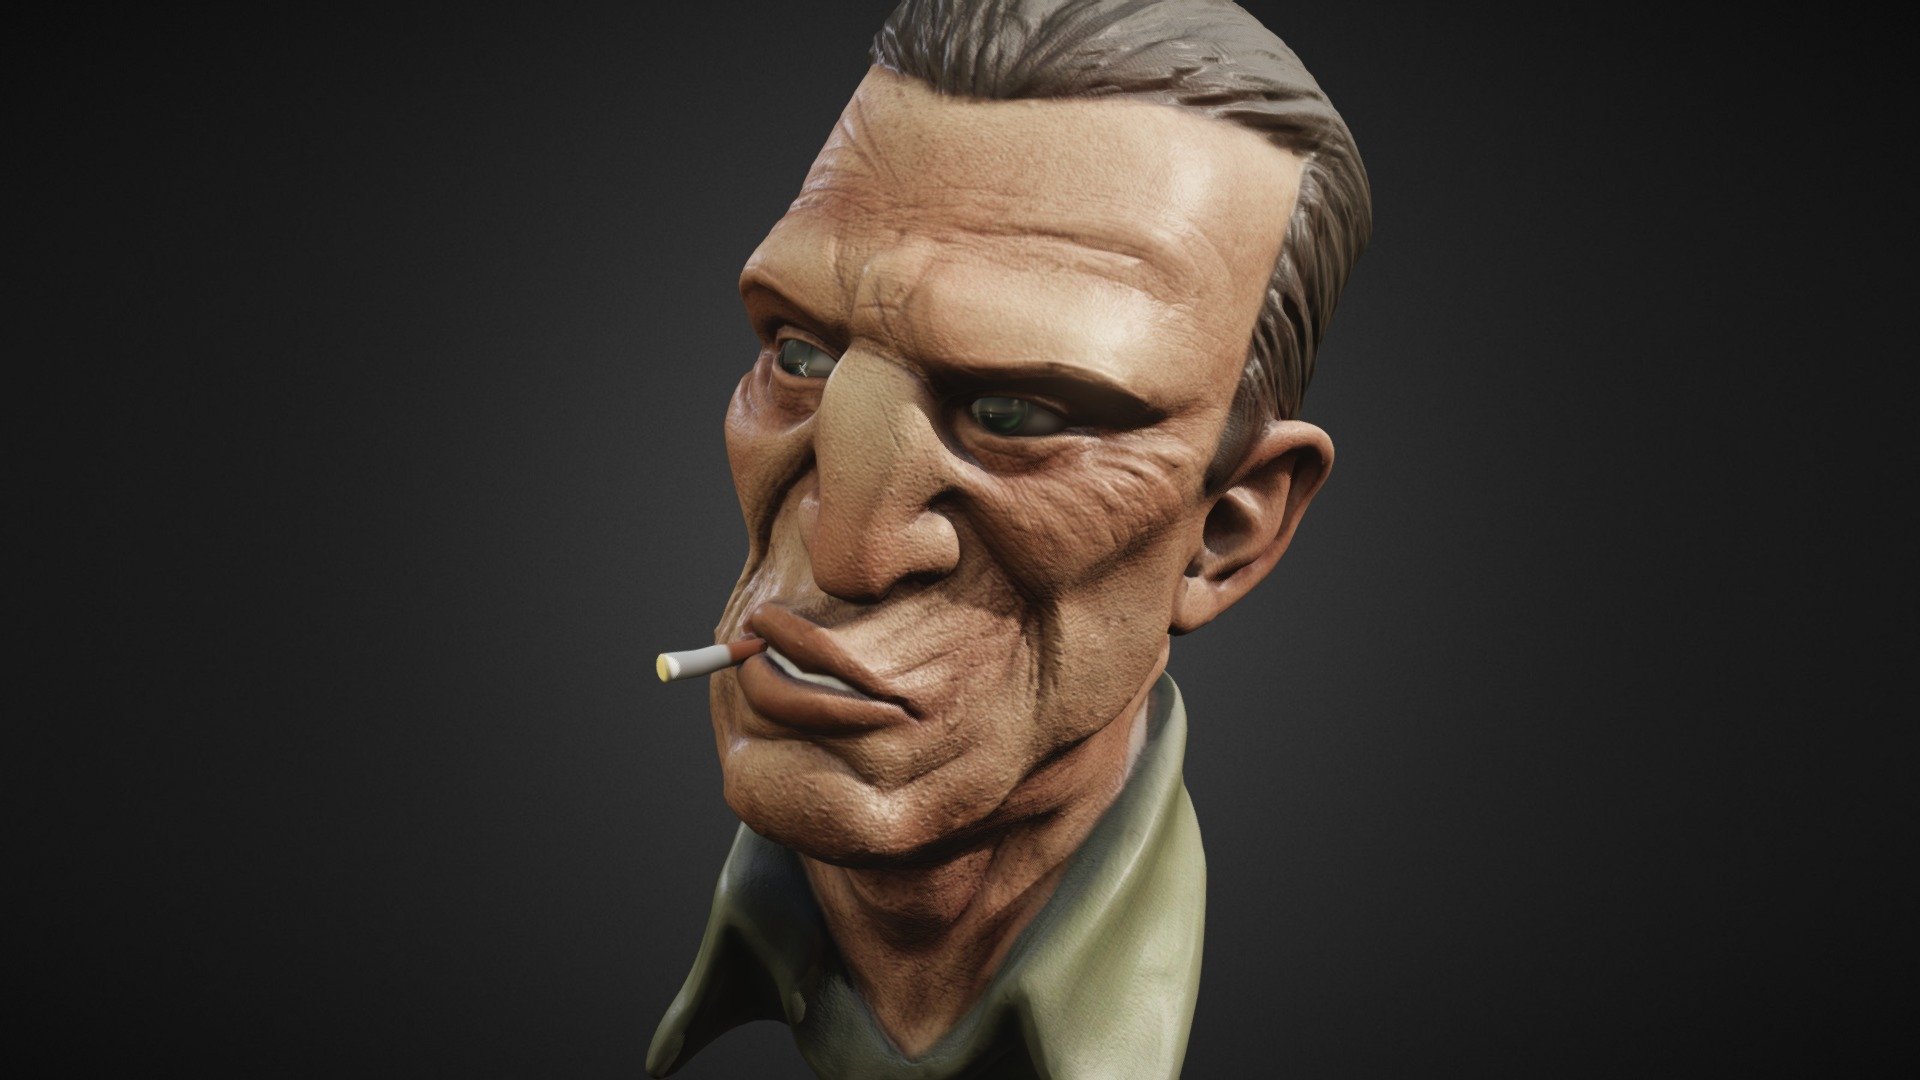 Based on RANDY BISHOP concept art.

You can see more renders here:
https://www.artstation.com/artwork/smoking-man-9669fc01-8279-4628-8cd8-bc5284c666ac - Smoking Man - 3D model by gustavorios 3d model